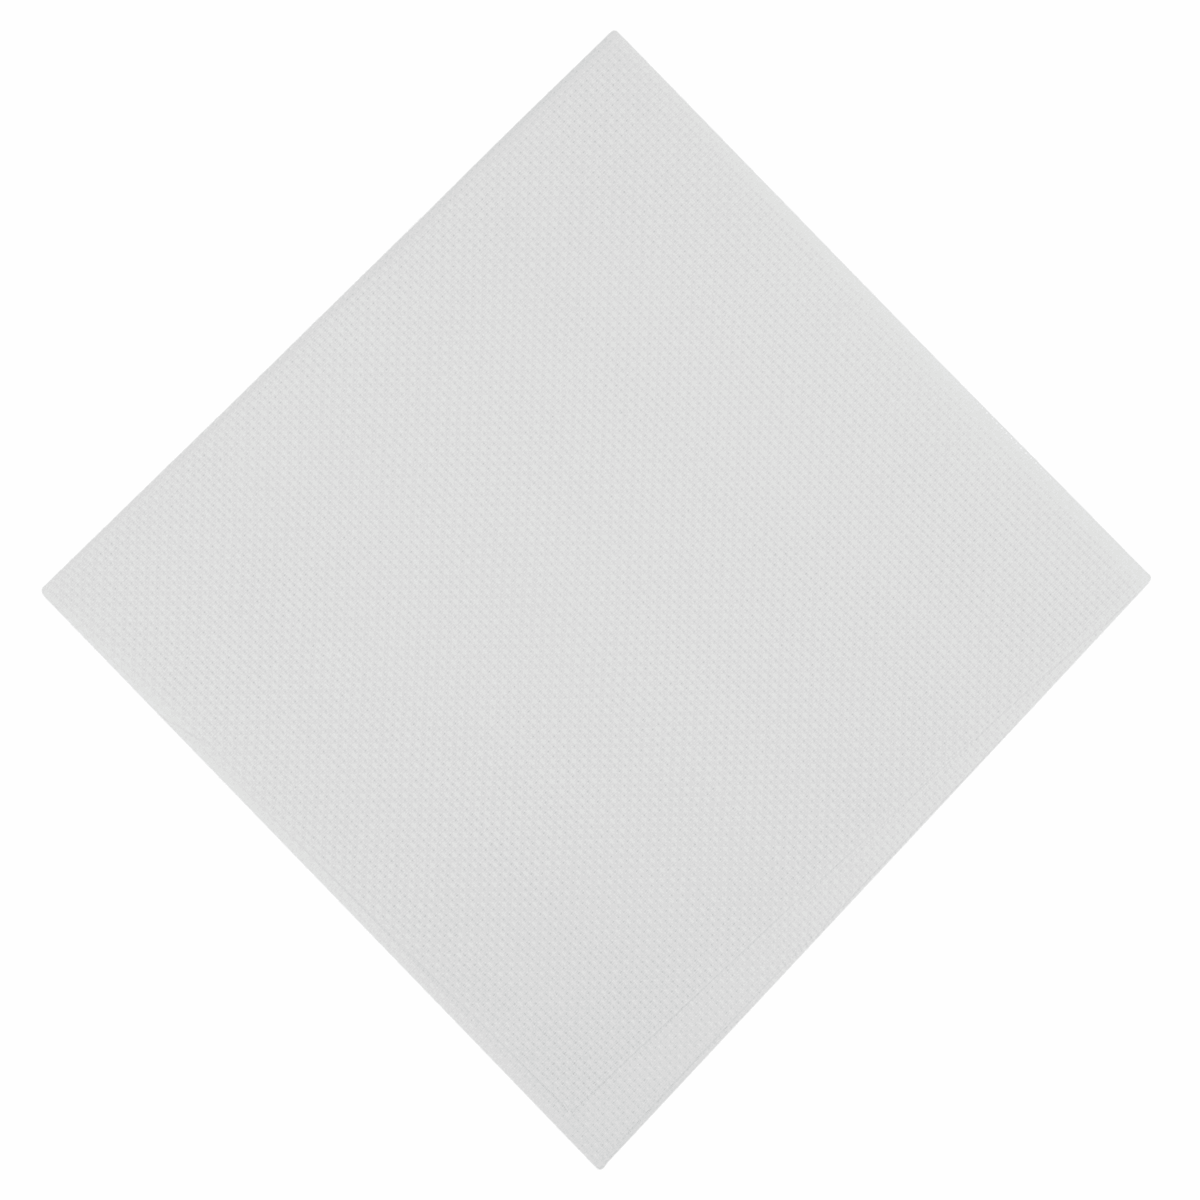 Trimits White Needlecraft Fabric - Aida 18 Count 45 x 30cm